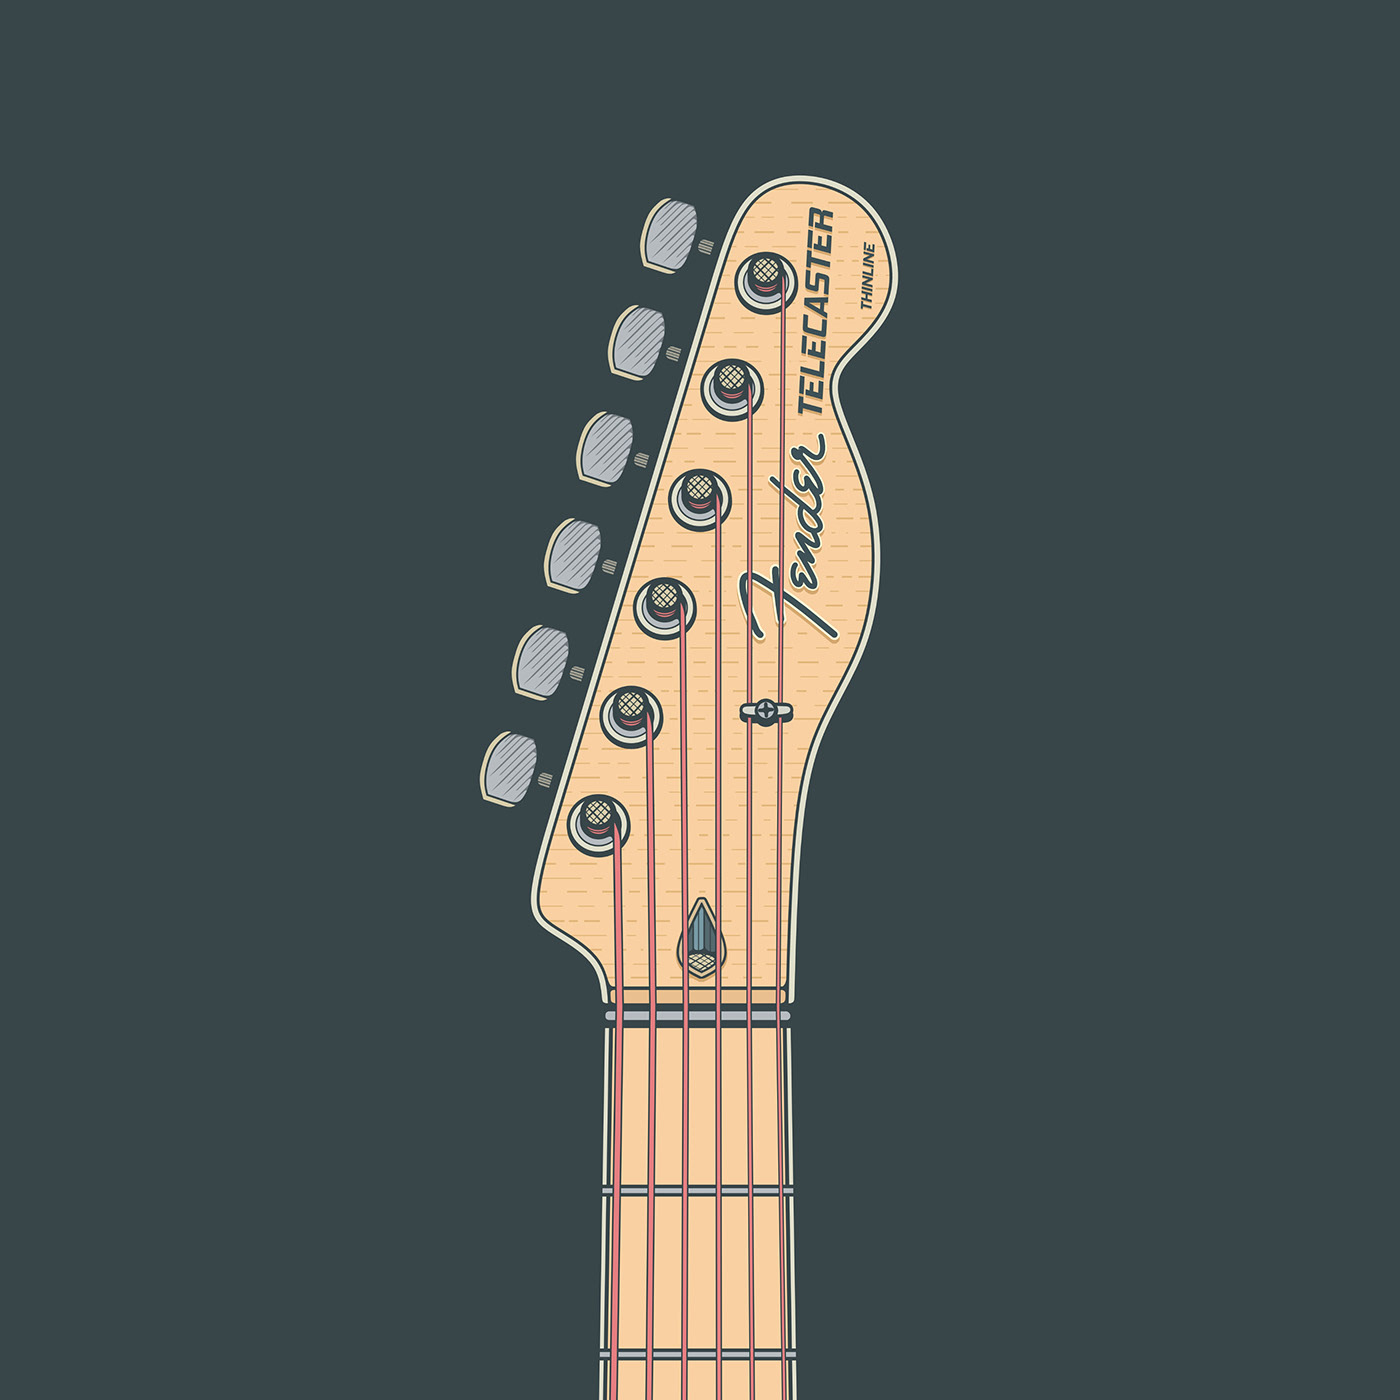 electric guitar fender fender guitar  Fender Telecaster guitar guitar art guitar illustration Telecaster thinline vector art